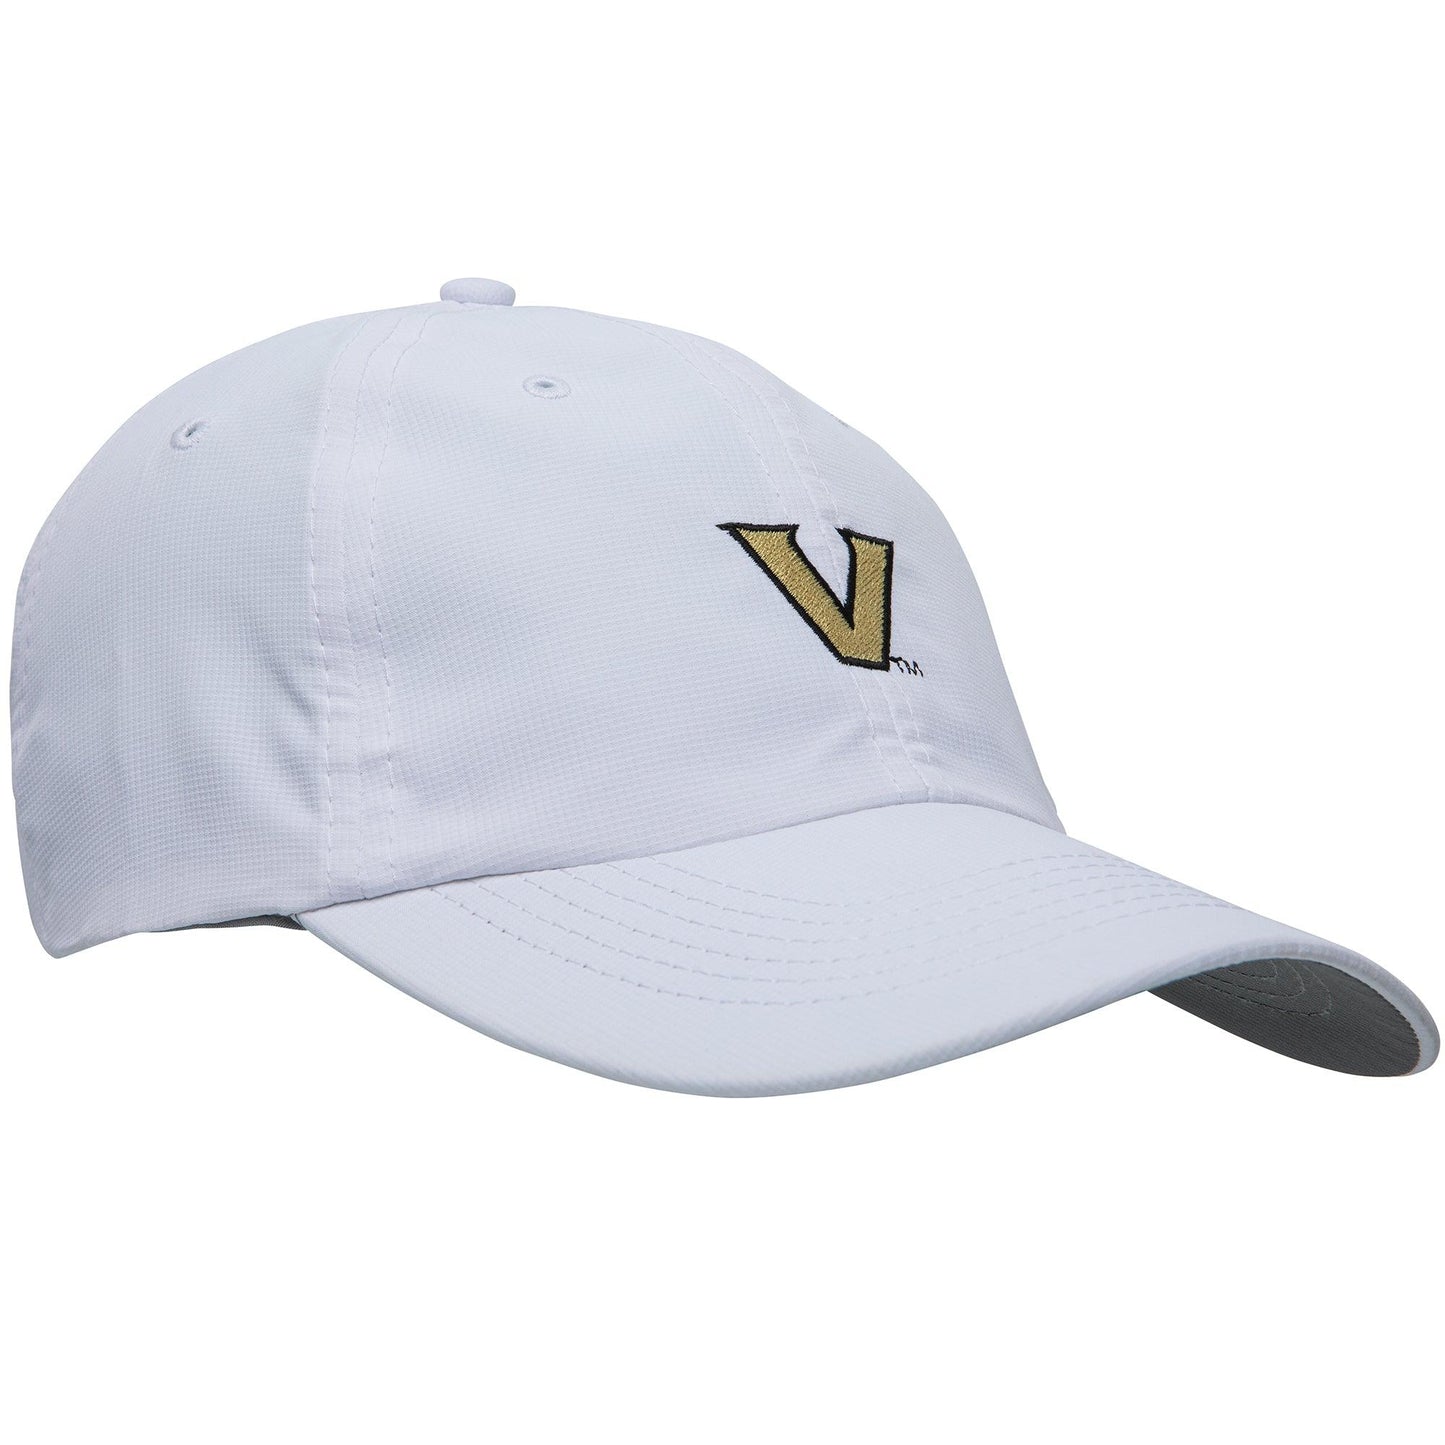 Vanderbilt Hat - Onward Reserve